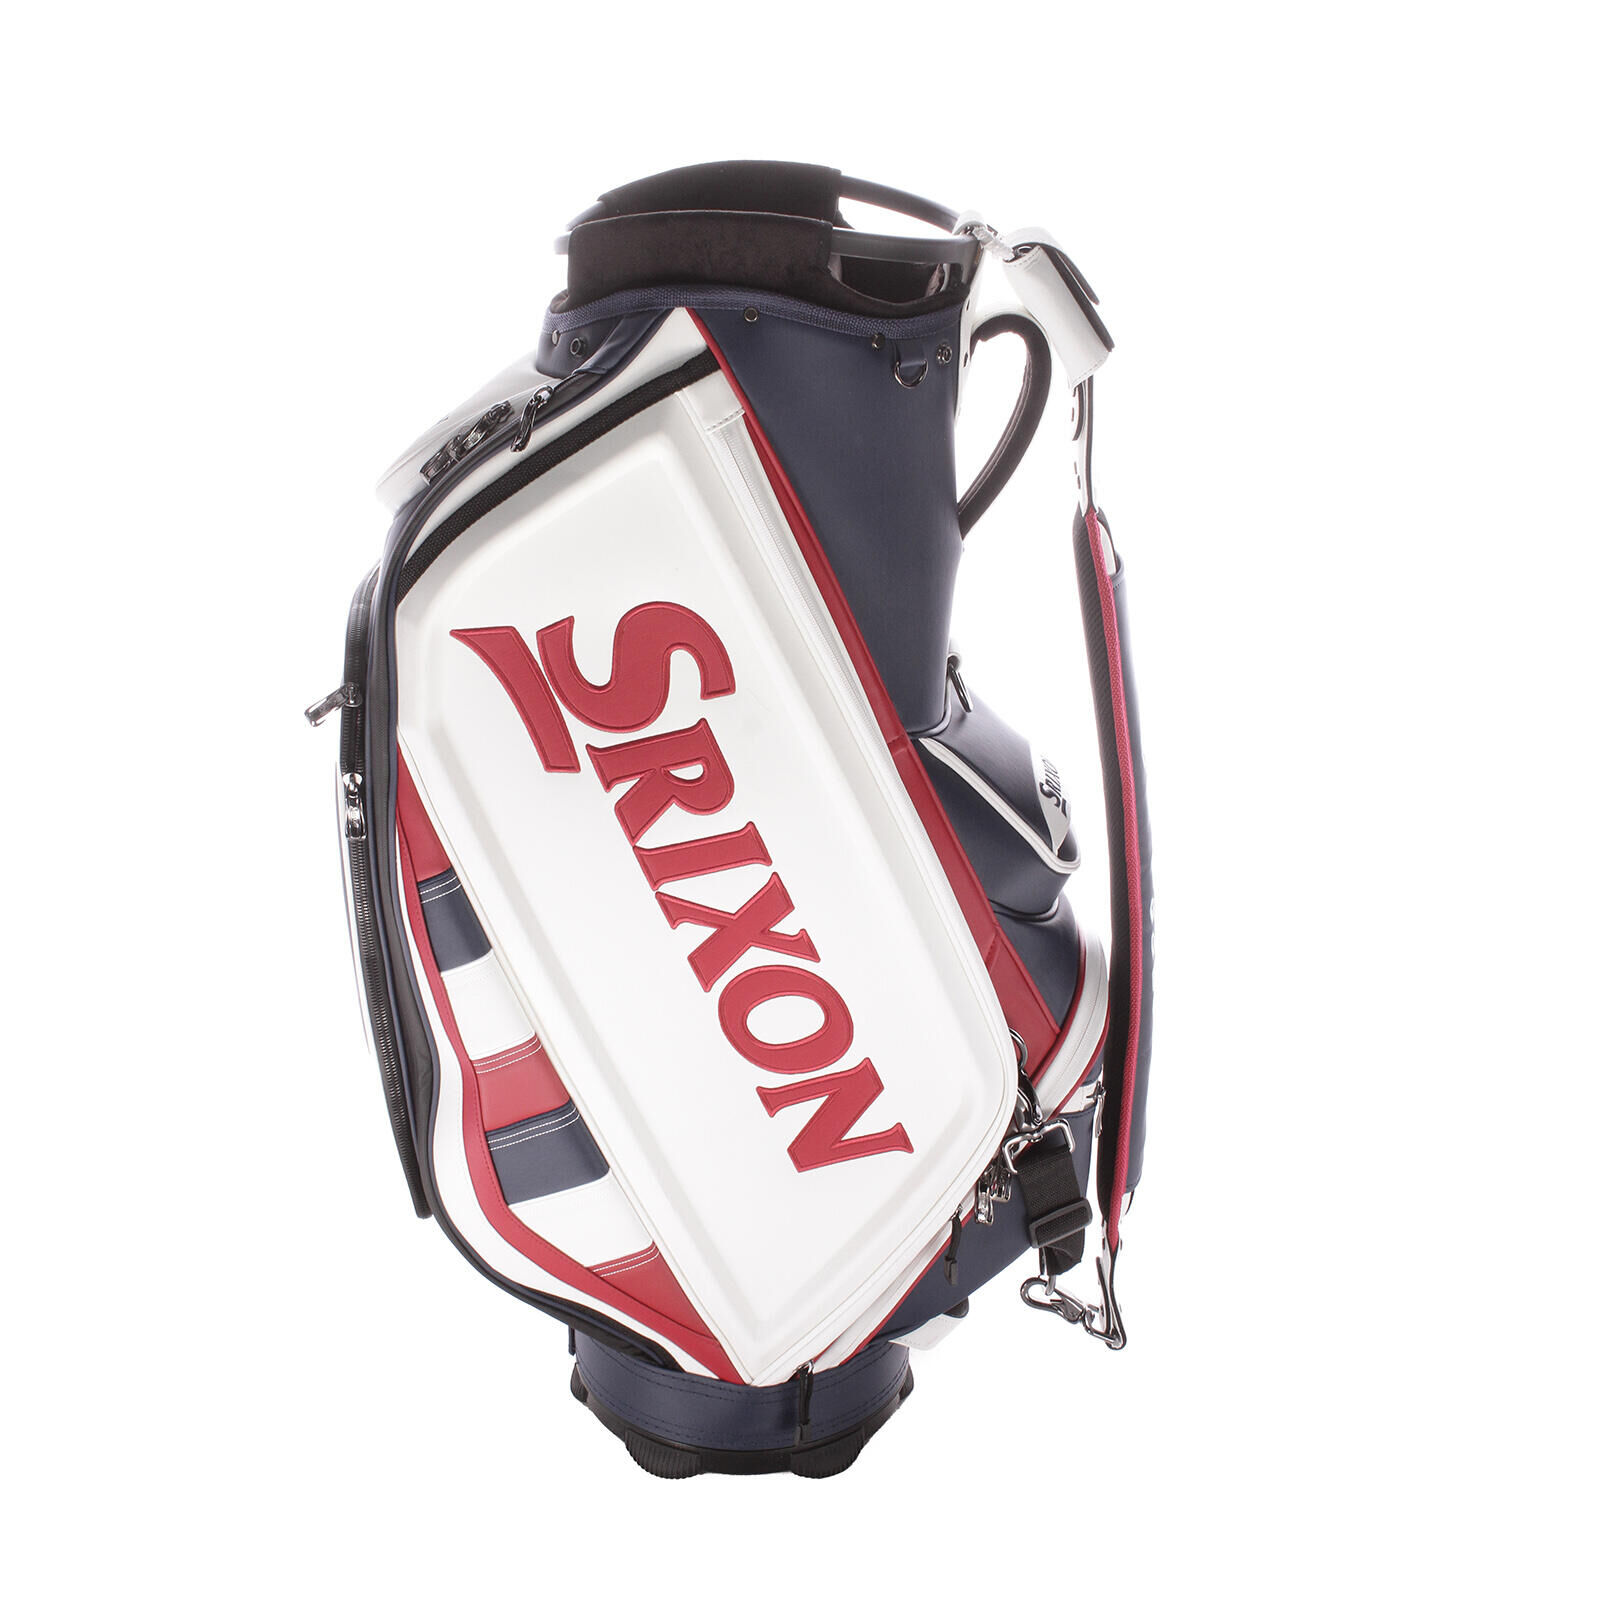 SRIXON USED - Srixon Staff Tour Bag with 5 Way Divider Top and Single Strap - GRADE B